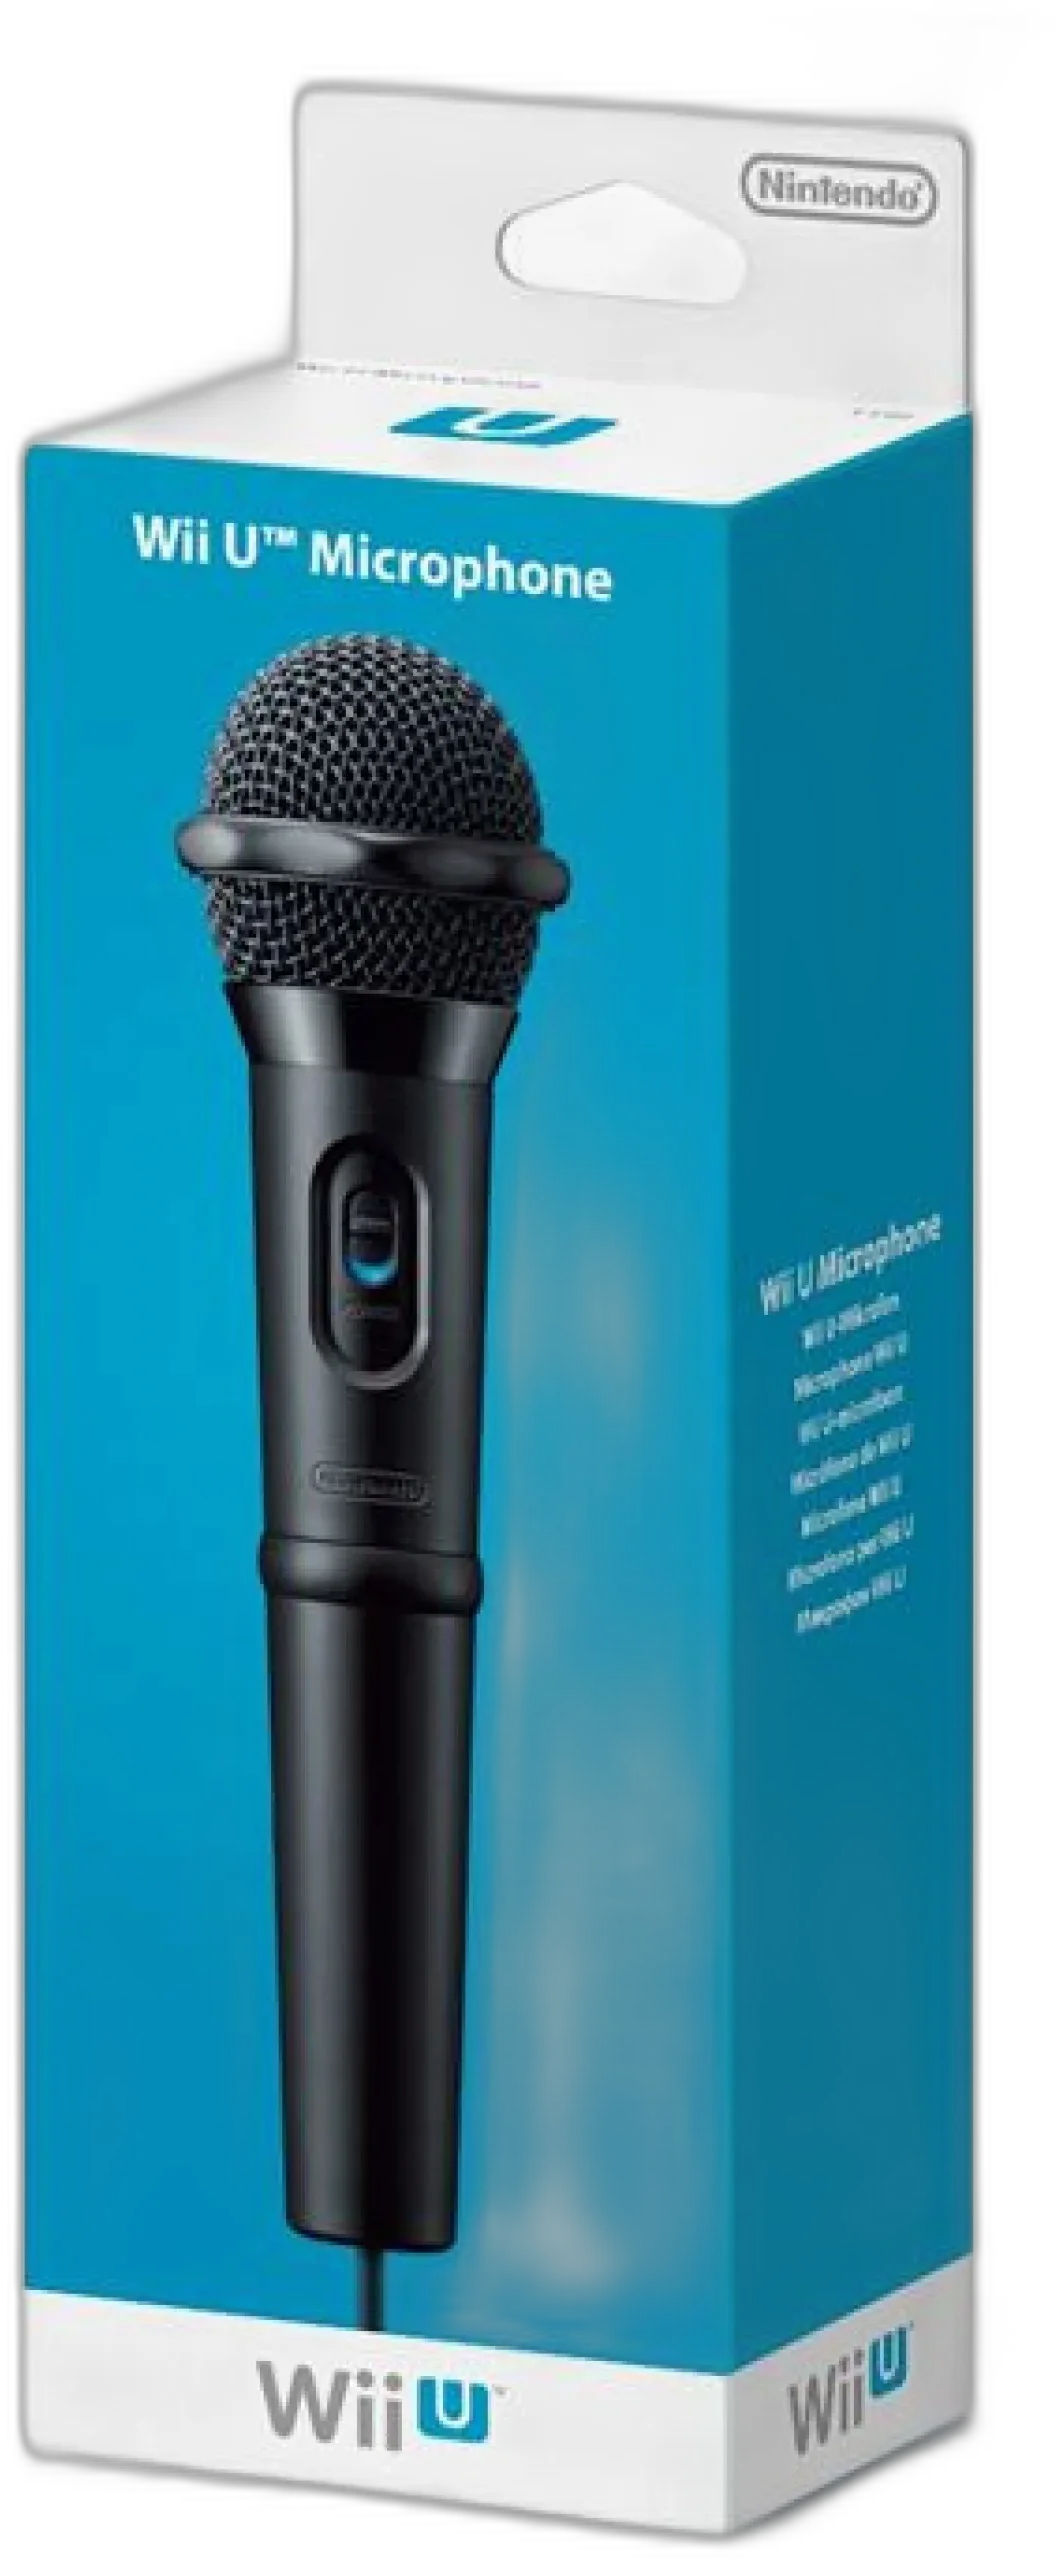  Nintendo Wii U Microphone [JP]